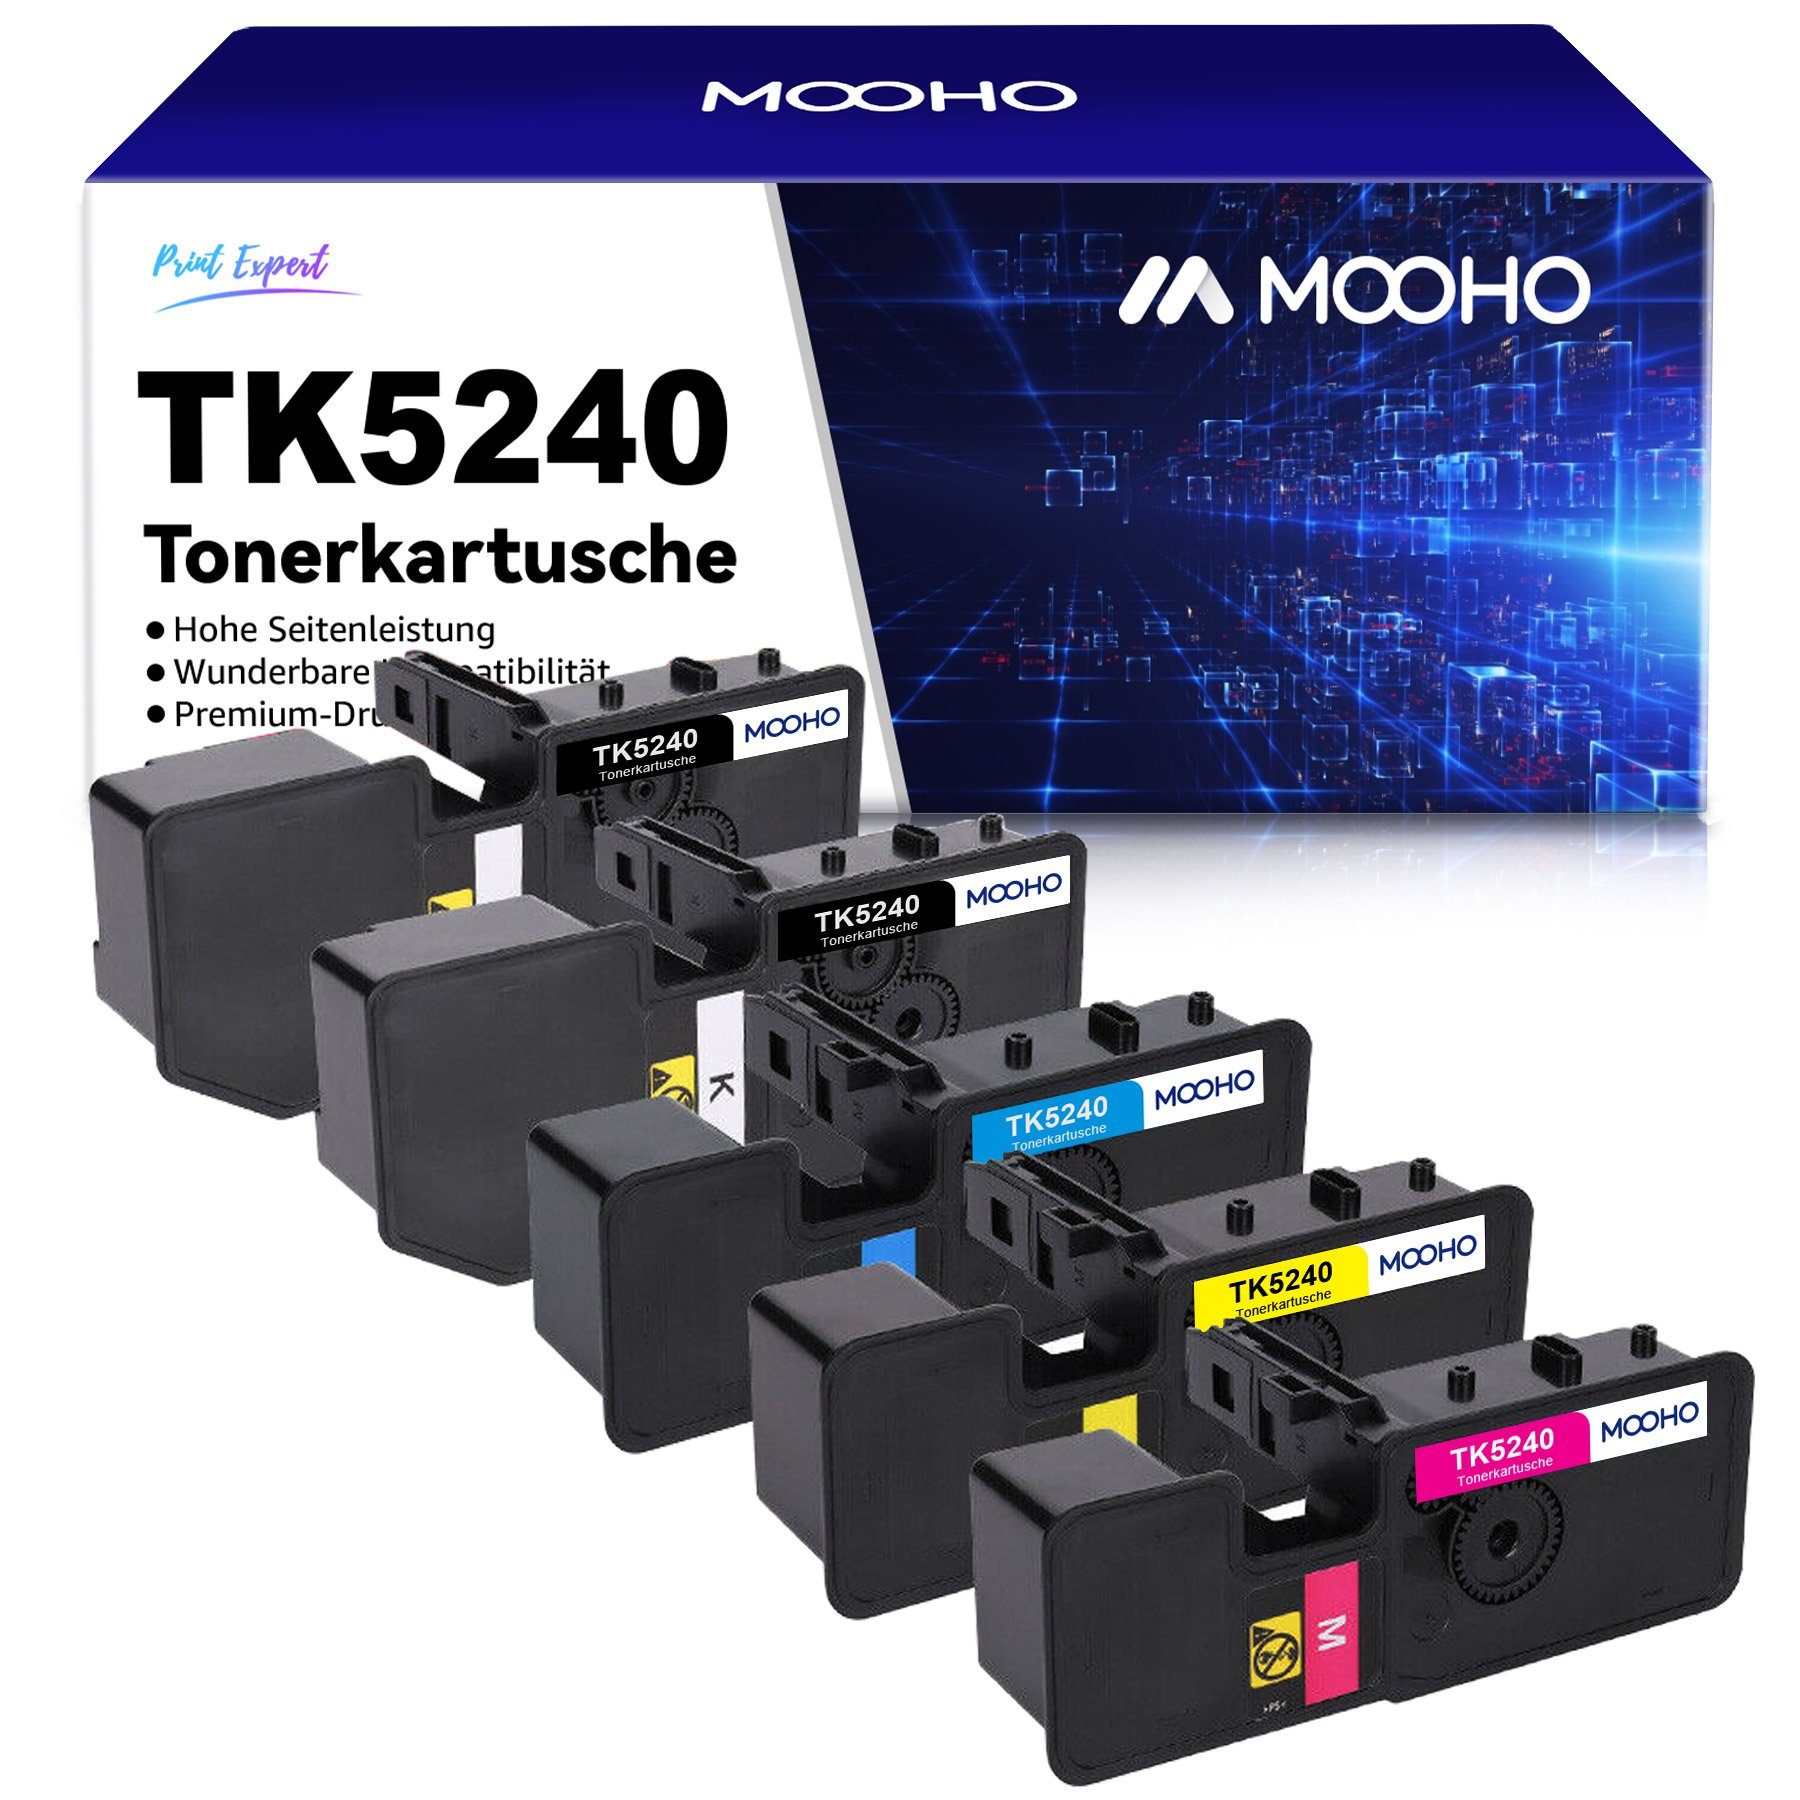 MOOHO Tonerkartusche TK-5240 TK 5420 für ECOSYS M5526cdw M5526cdn P5026cdn P5026cdw